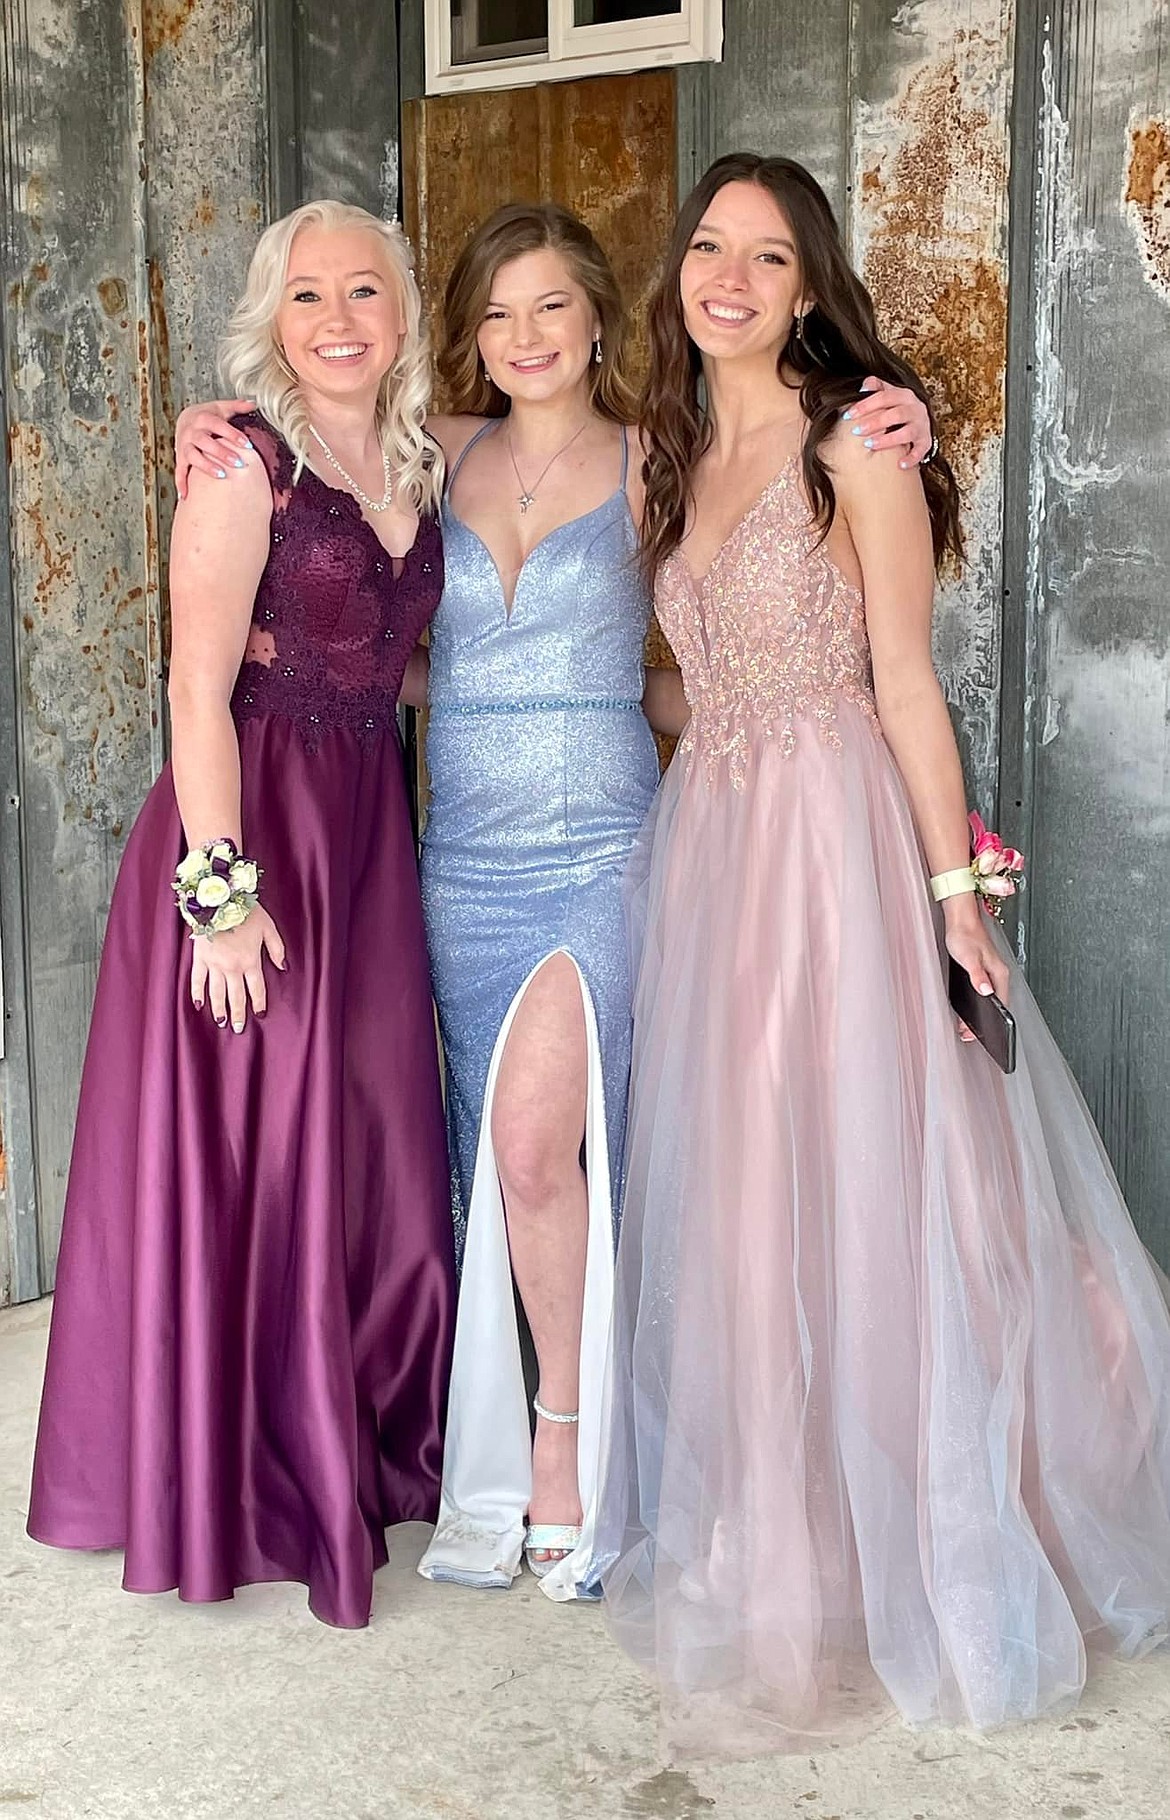 Friends since Kindergarten, Karmen Alexander, Taylor Hurd, and Rylie Burnham make memories attending their senior prom together at St. Regis High School. (Photo courtesy/Pamela Cole)